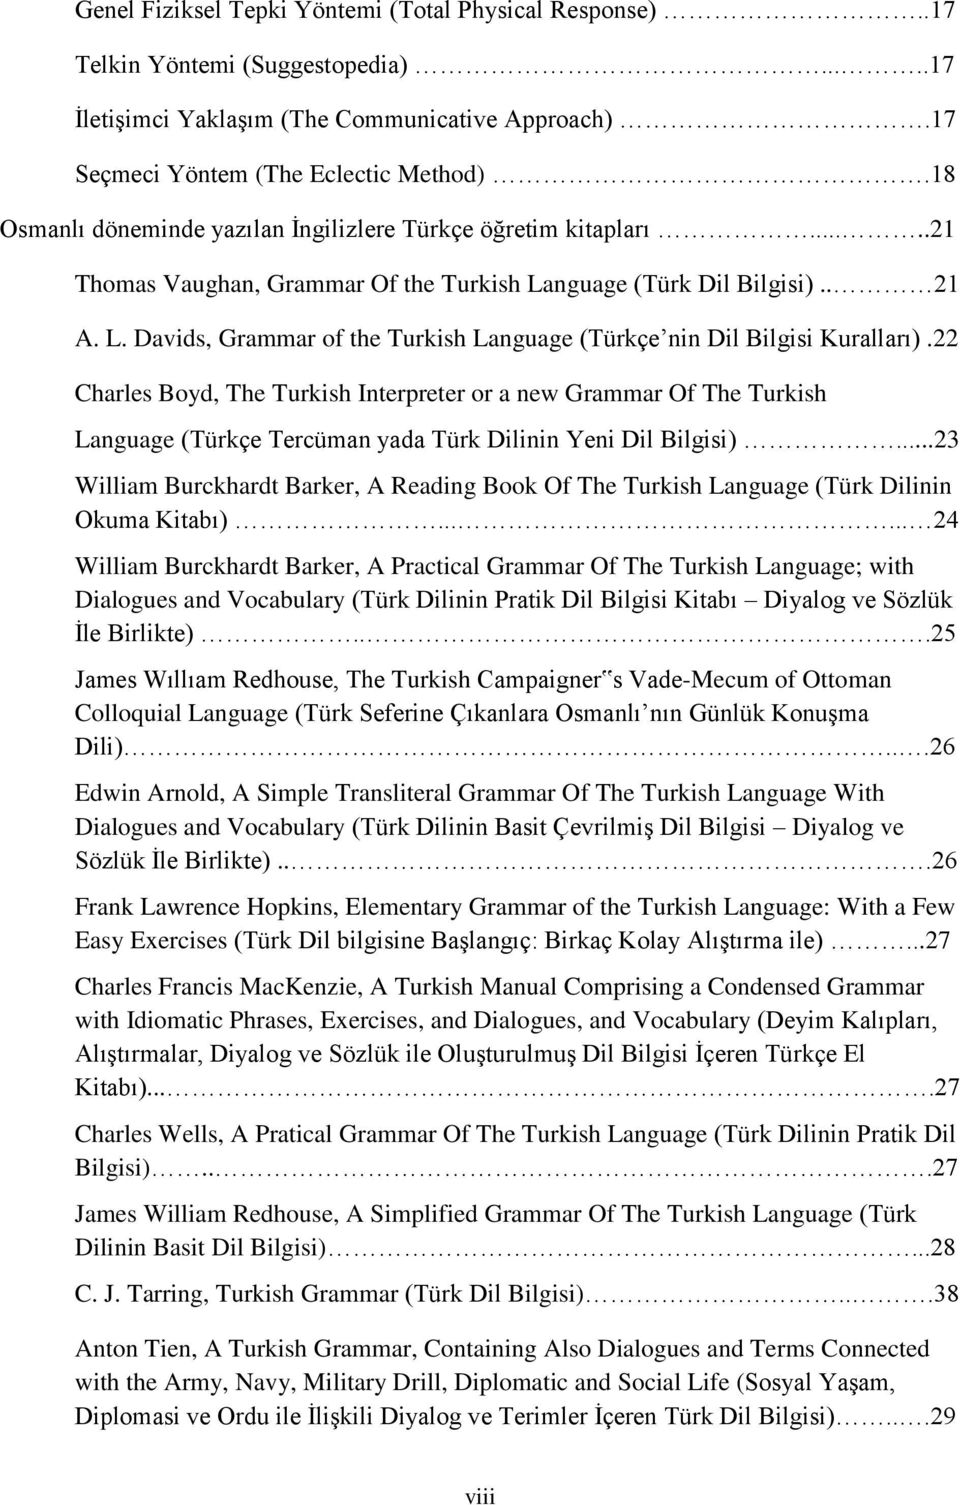 22 Charles Boyd, The Turkish Interpreter or a new Grammar Of The Turkish Language (Türkçe Tercüman yada Türk Dilinin Yeni Dil Bilgisi).